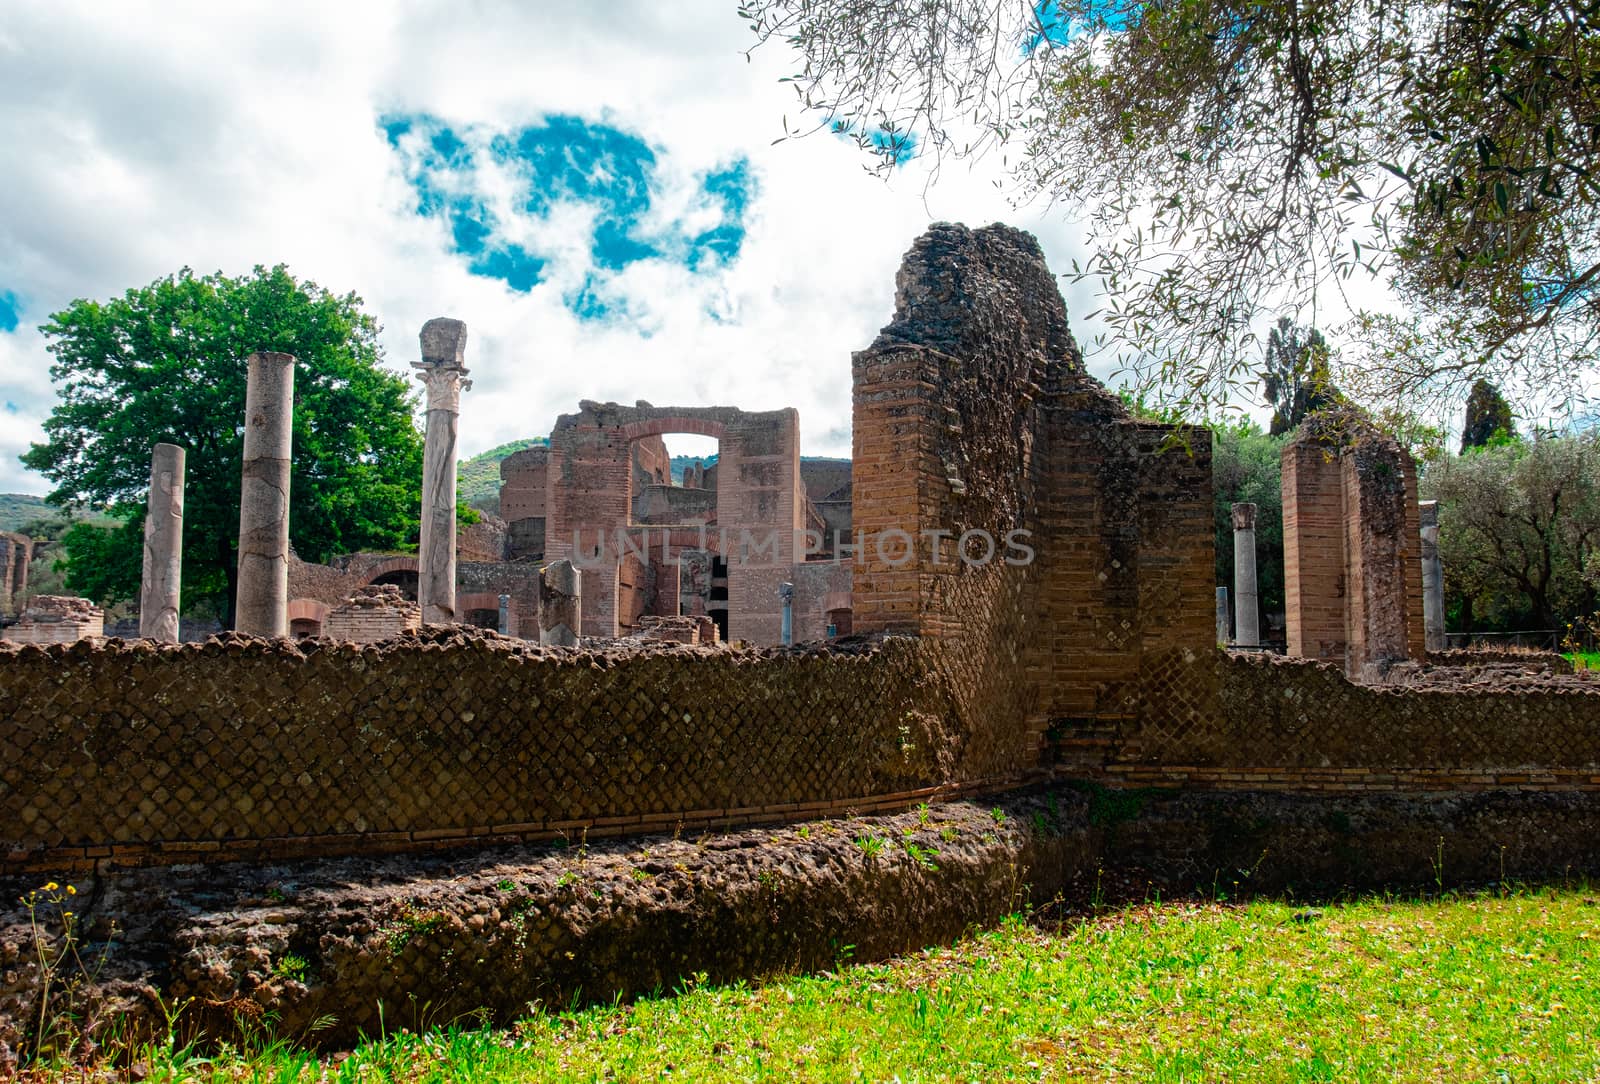 Villa Adriana in Tivoli Rome - Lazio Italy - The Three Exedras building ruins in Hardrians Villa archaeological site of Unesco by LucaLorenzelli